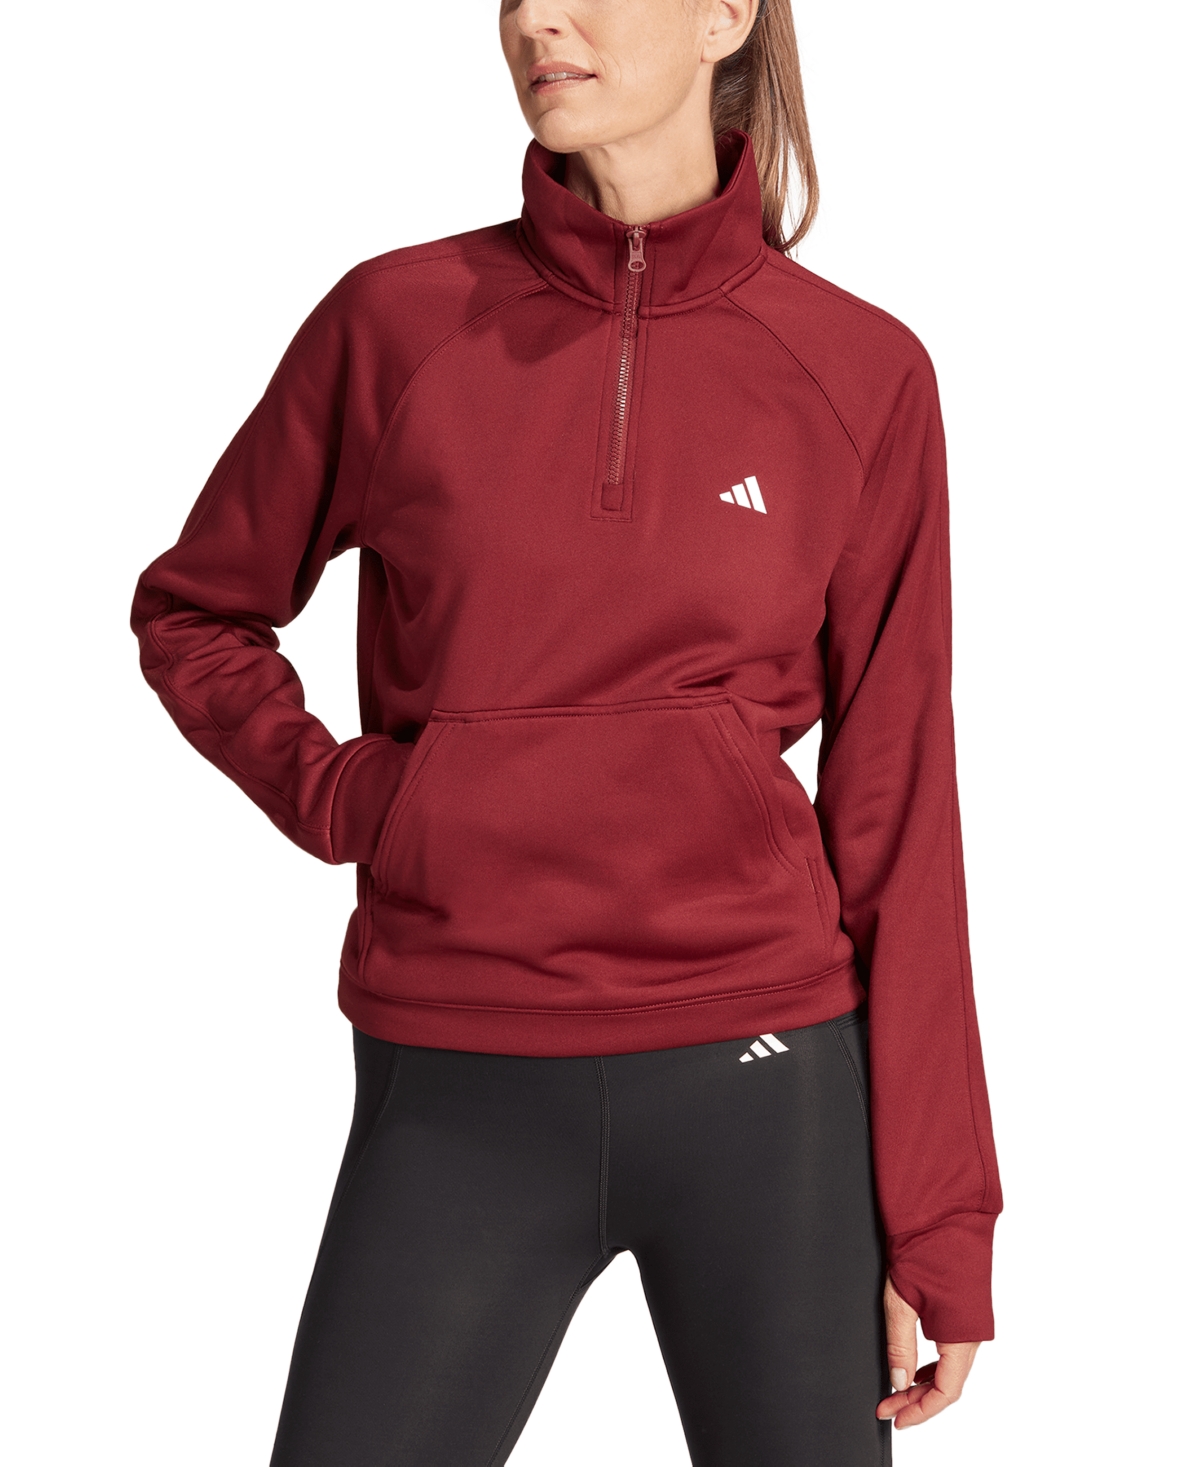 Adidas Originals Women's Aeroready Game & Go Quarter-zip Thumb-hole Top In Shadow Red,white